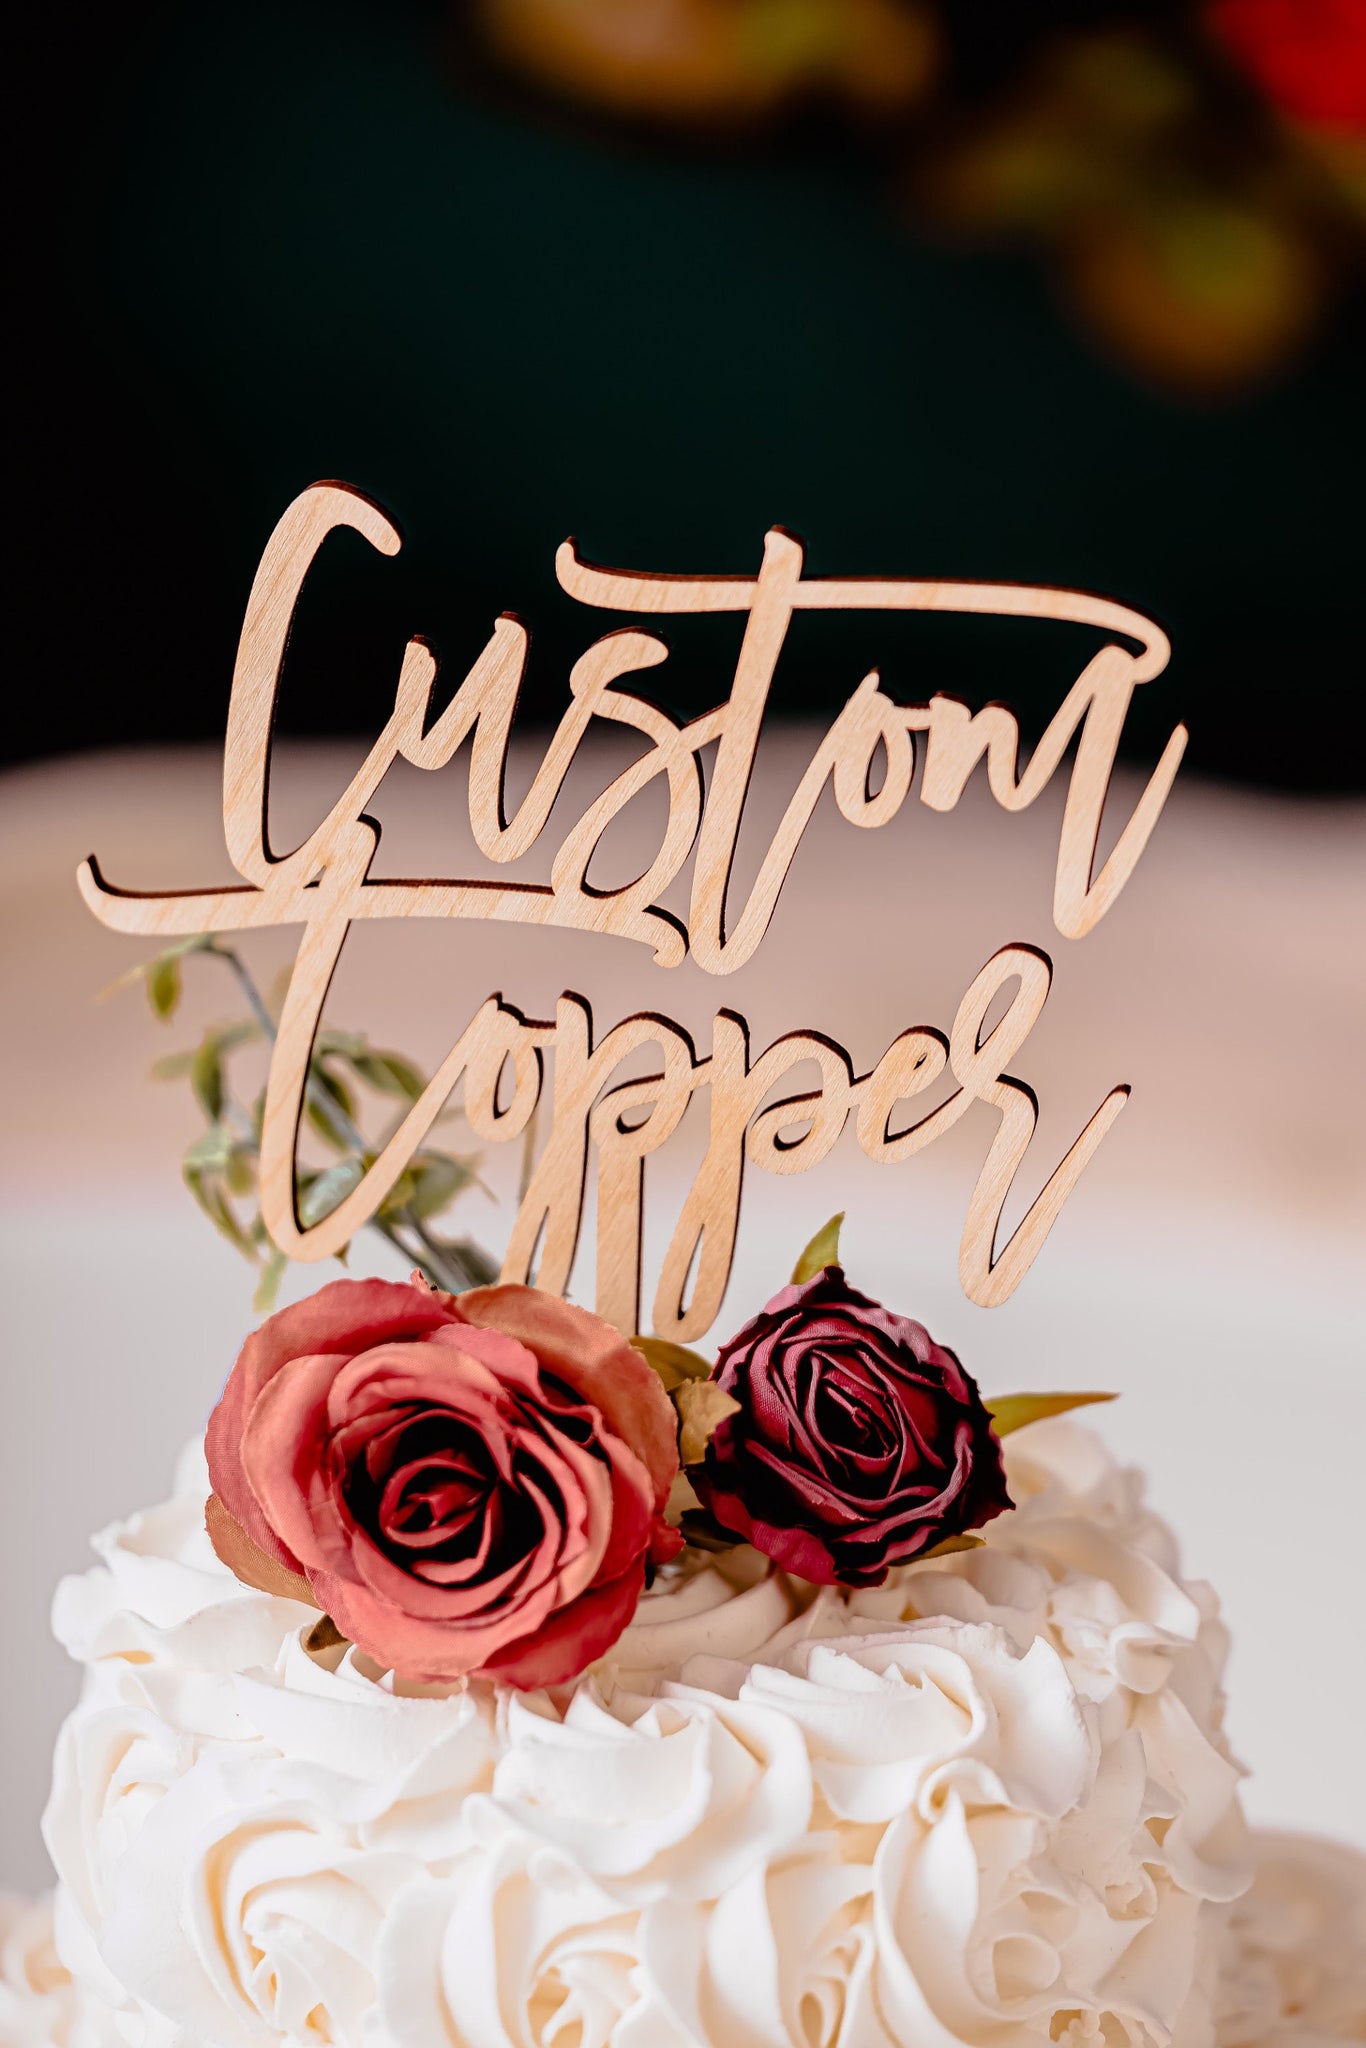 Custom Wooden Wedding Cake Topper Rustic Gold Silver Rose Gold Black Anniversary Name Cake Topper